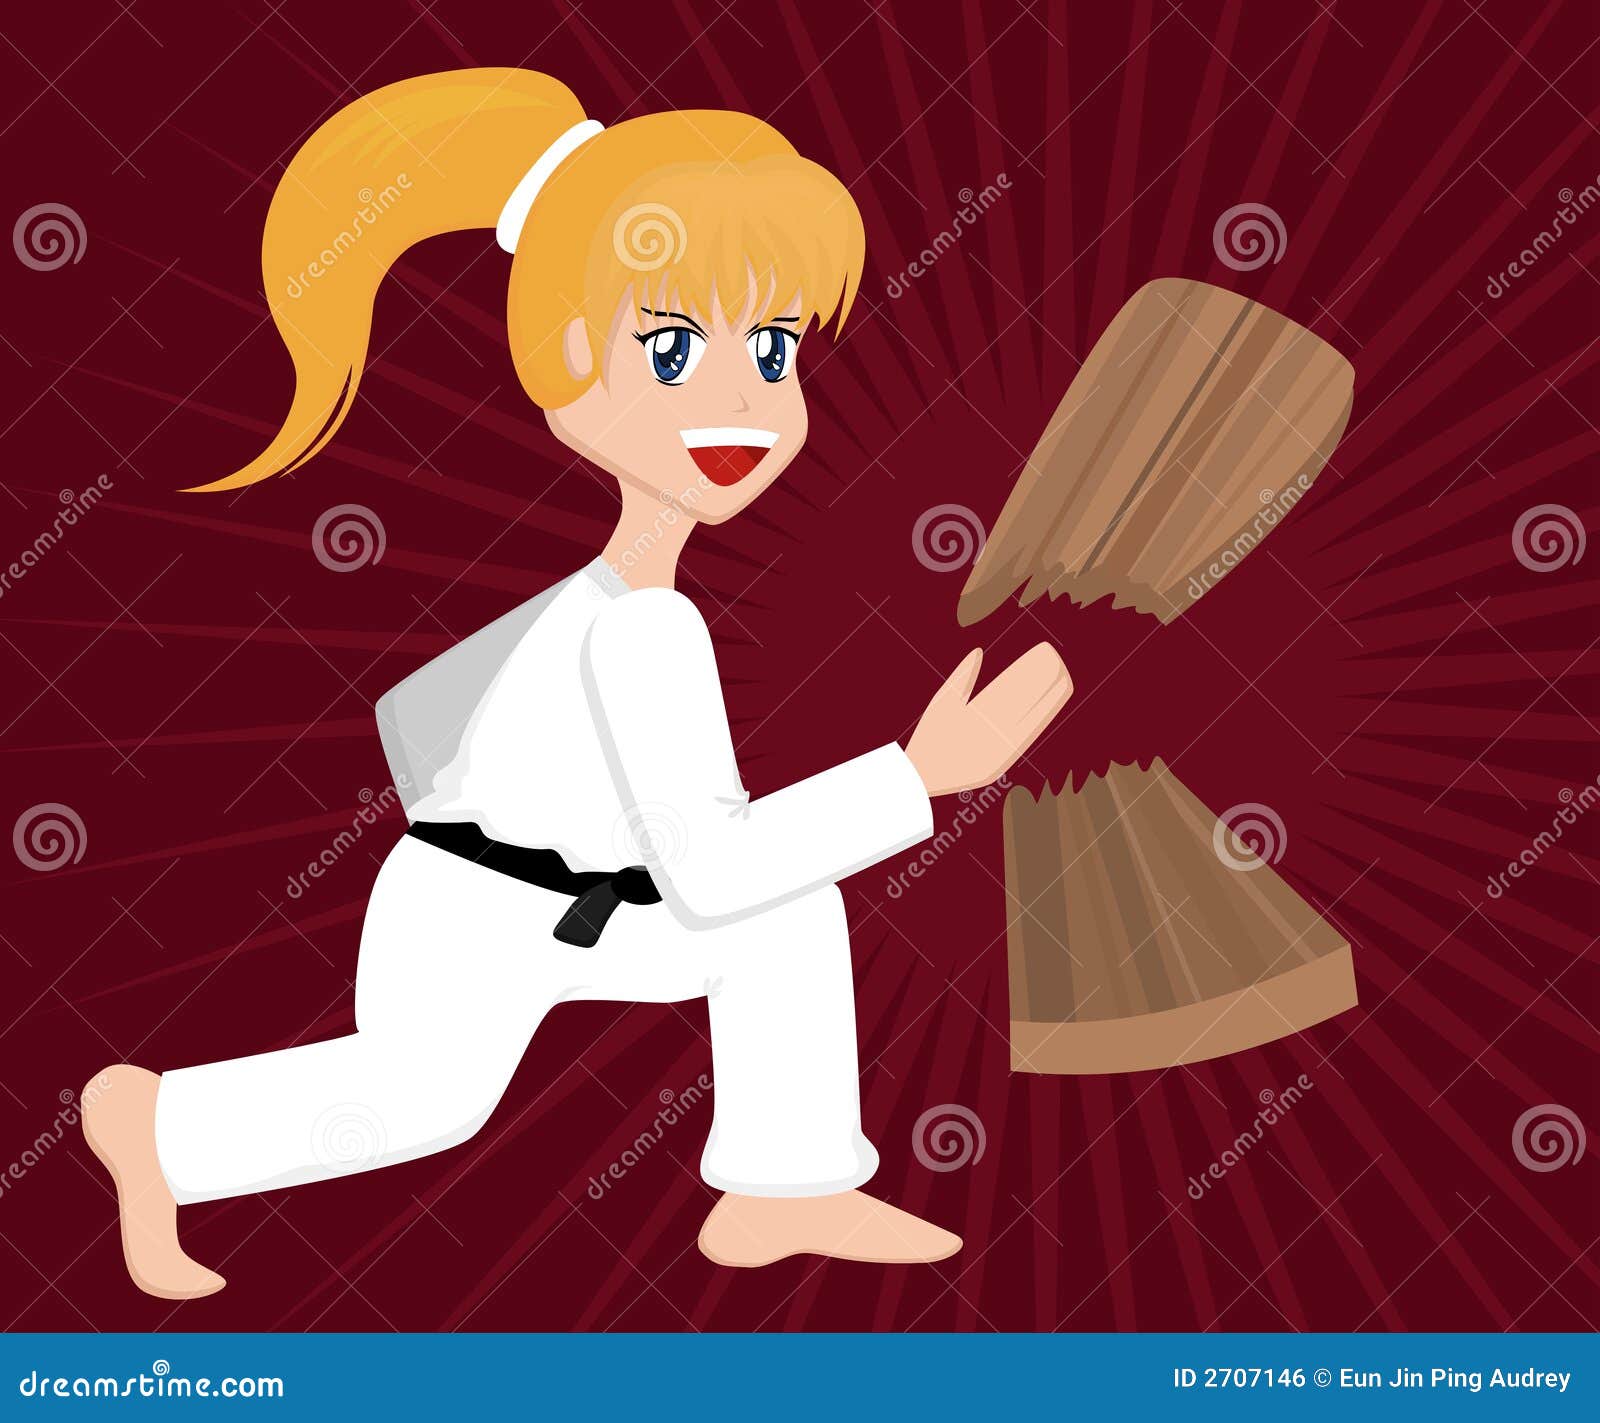 girl karate clipart - photo #25